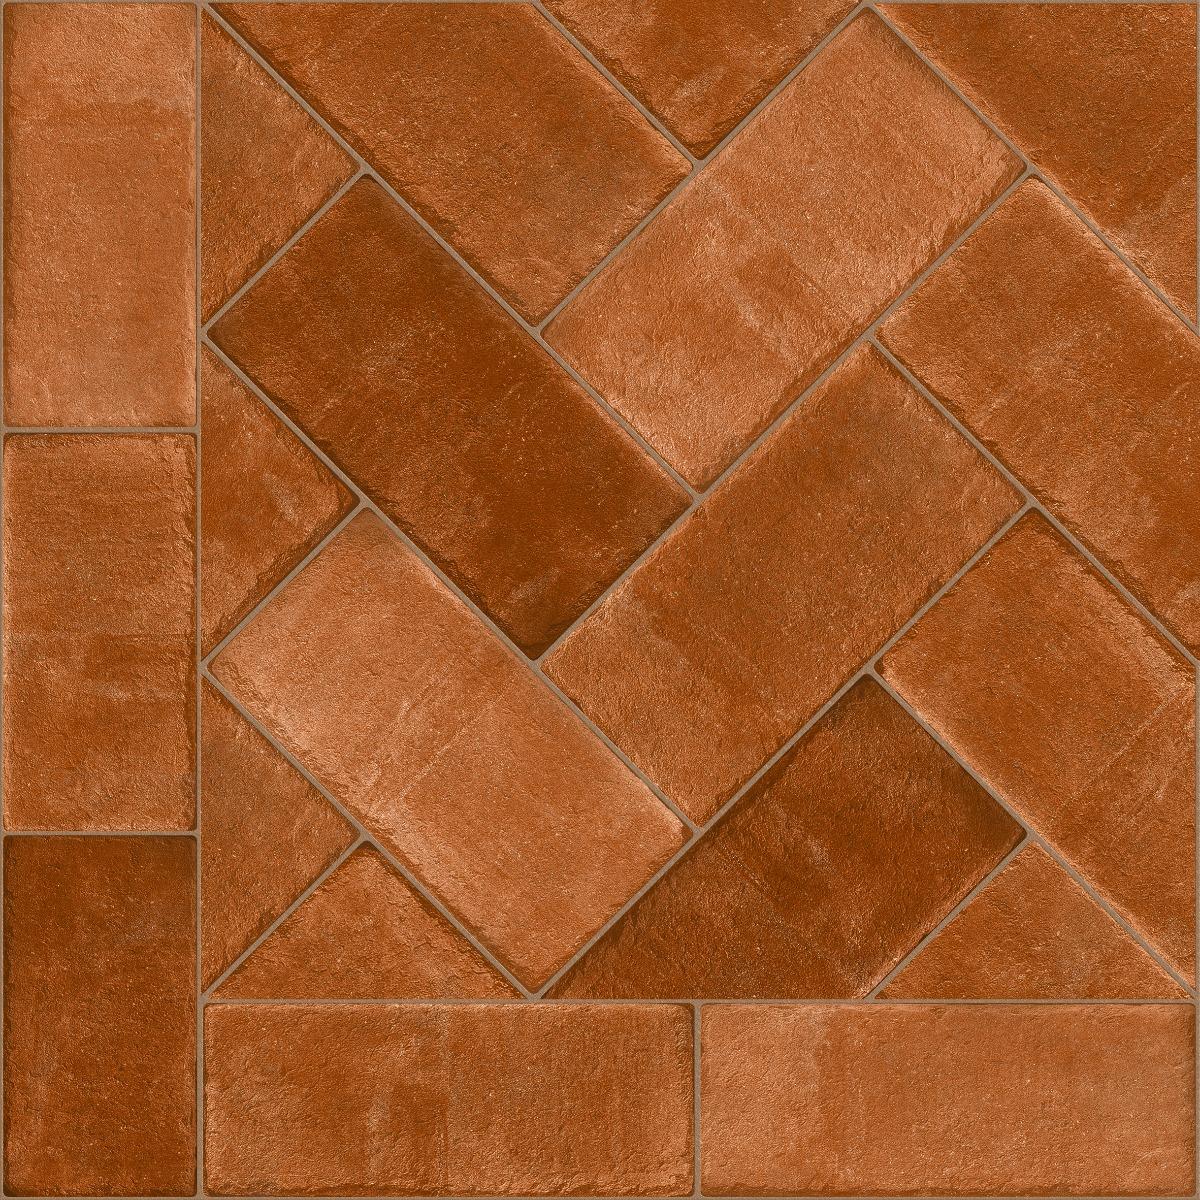 Forever Tiles for Bathroom Tiles, Living Room Tiles, Bedroom Tiles, Accent Tiles, Hospital Tiles, Bar/Restaurant, Commercial/Office, Outdoor Area